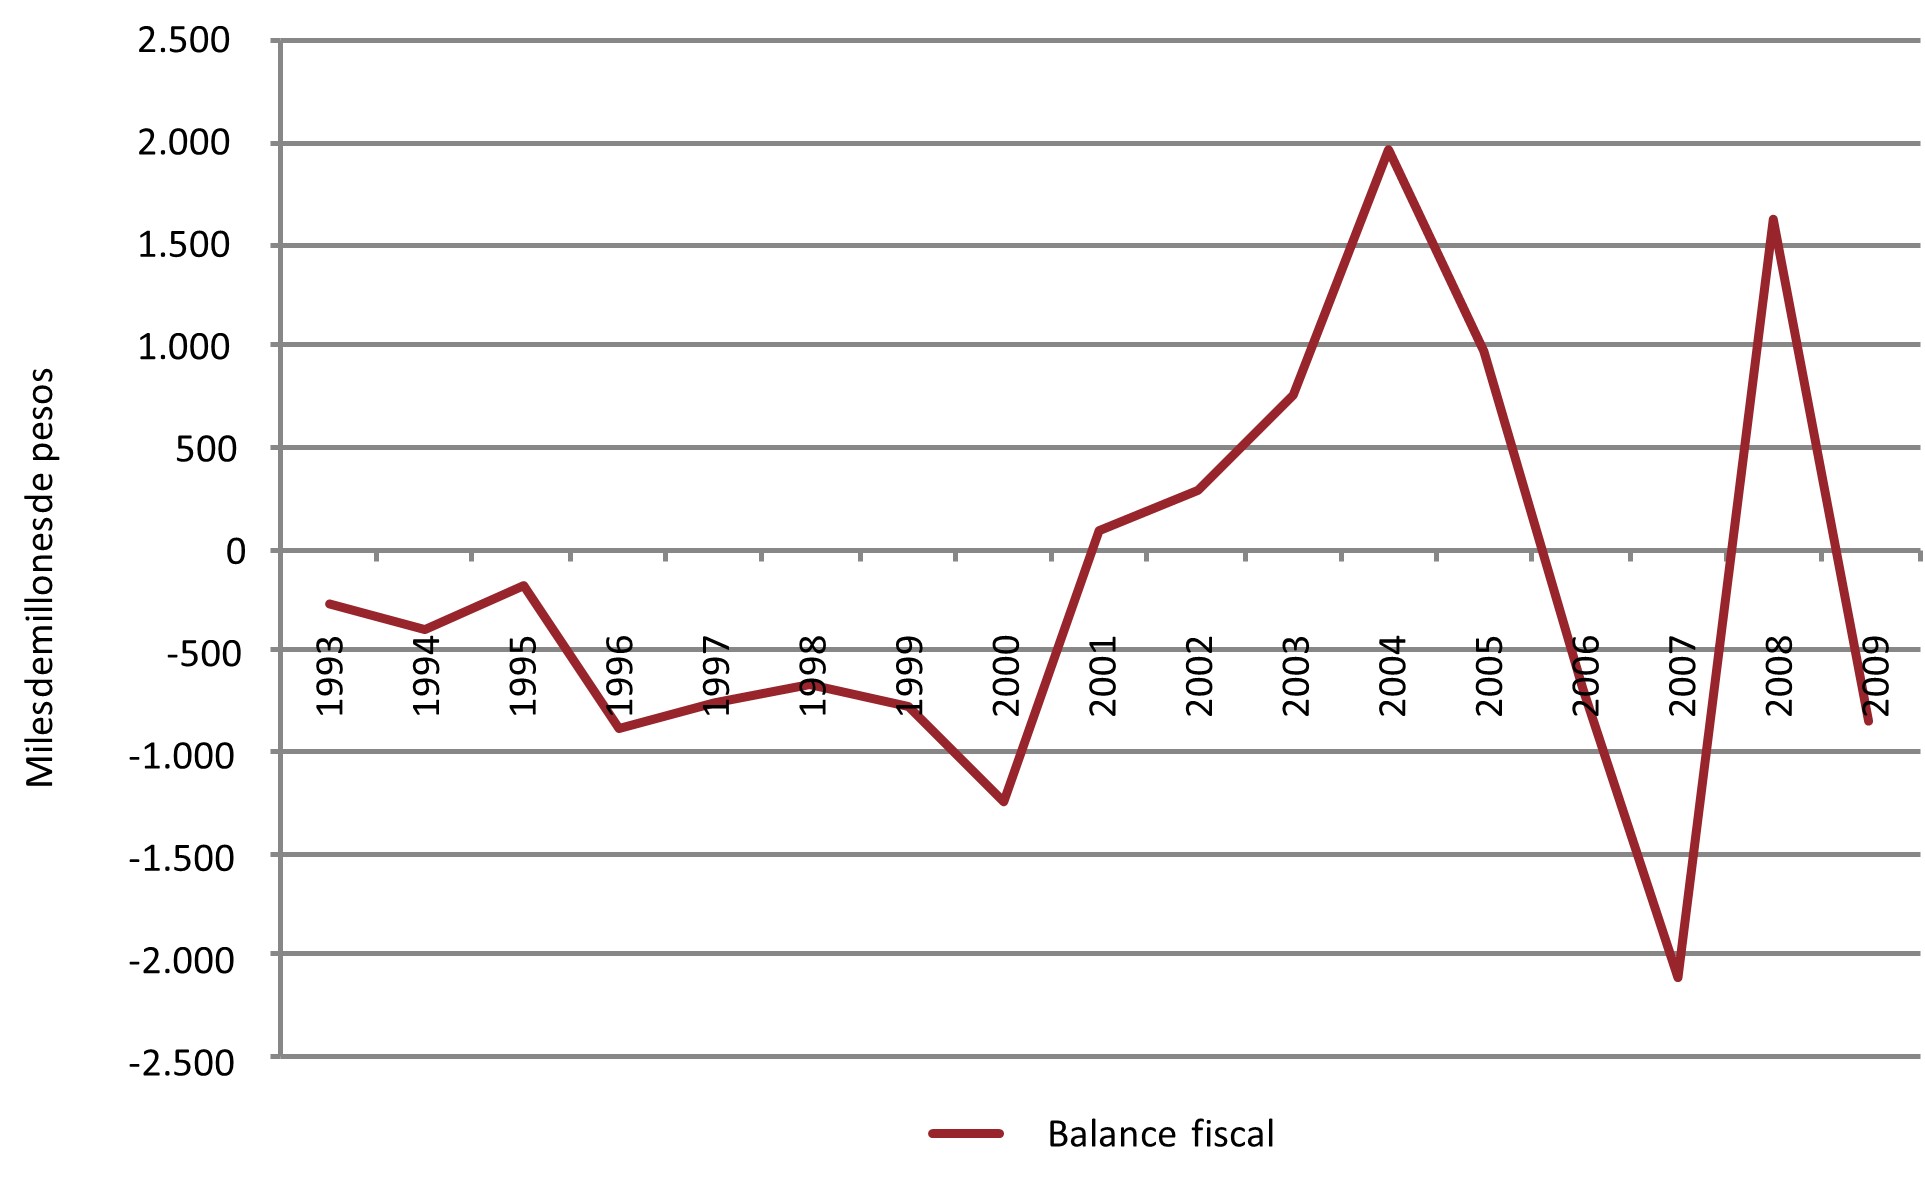 Balance
fiscal de las entidades territoriales, 1993-2009